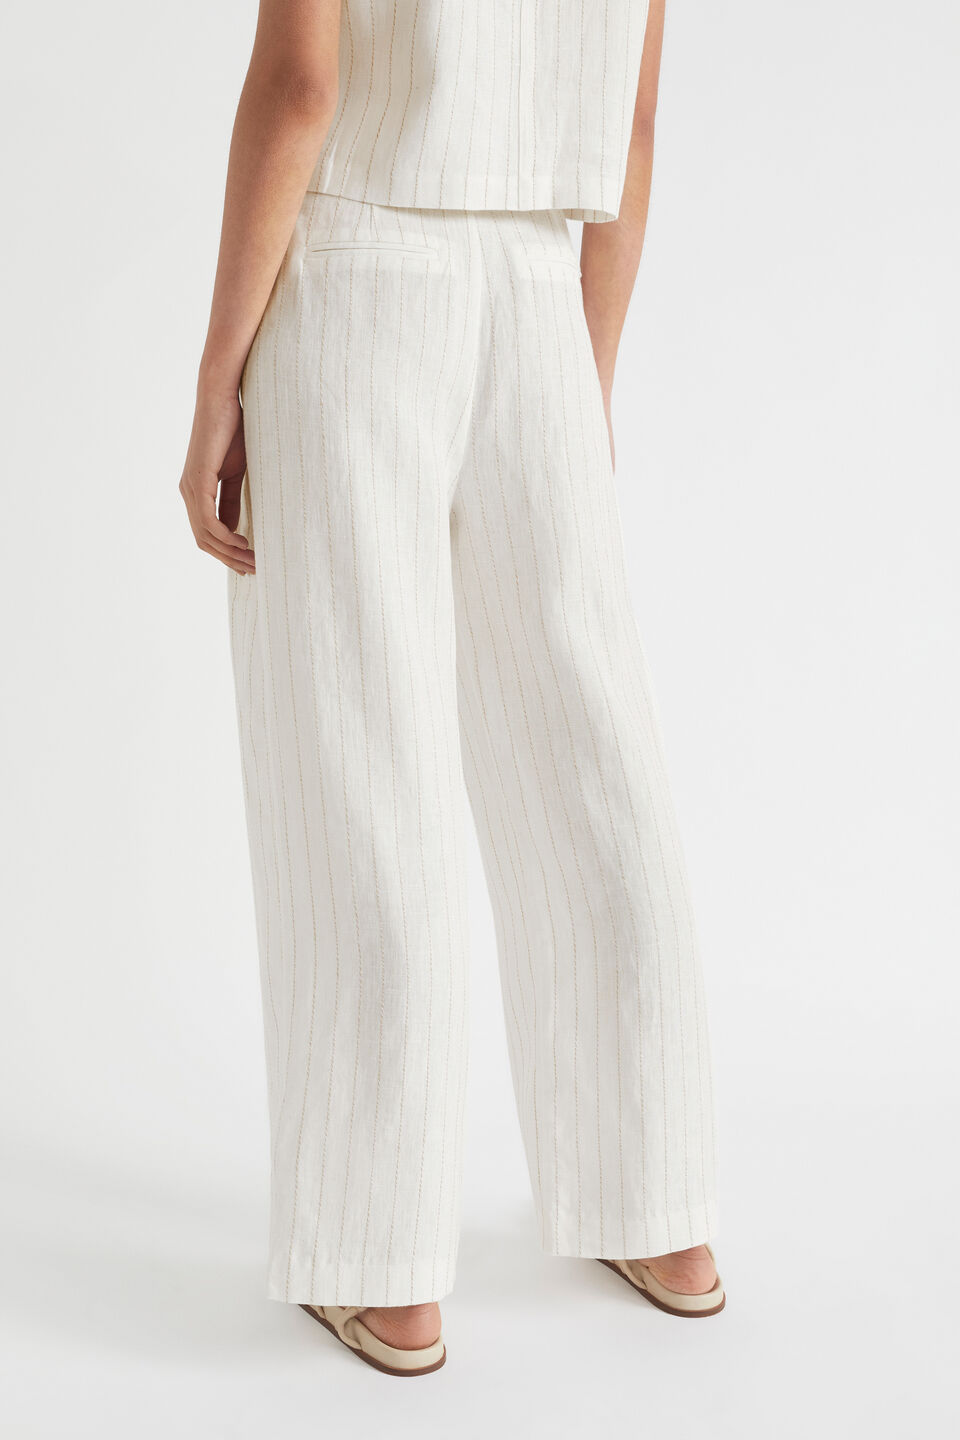 Linen Stripe Pleat Pant  Auburn Pinstripe  hi-res